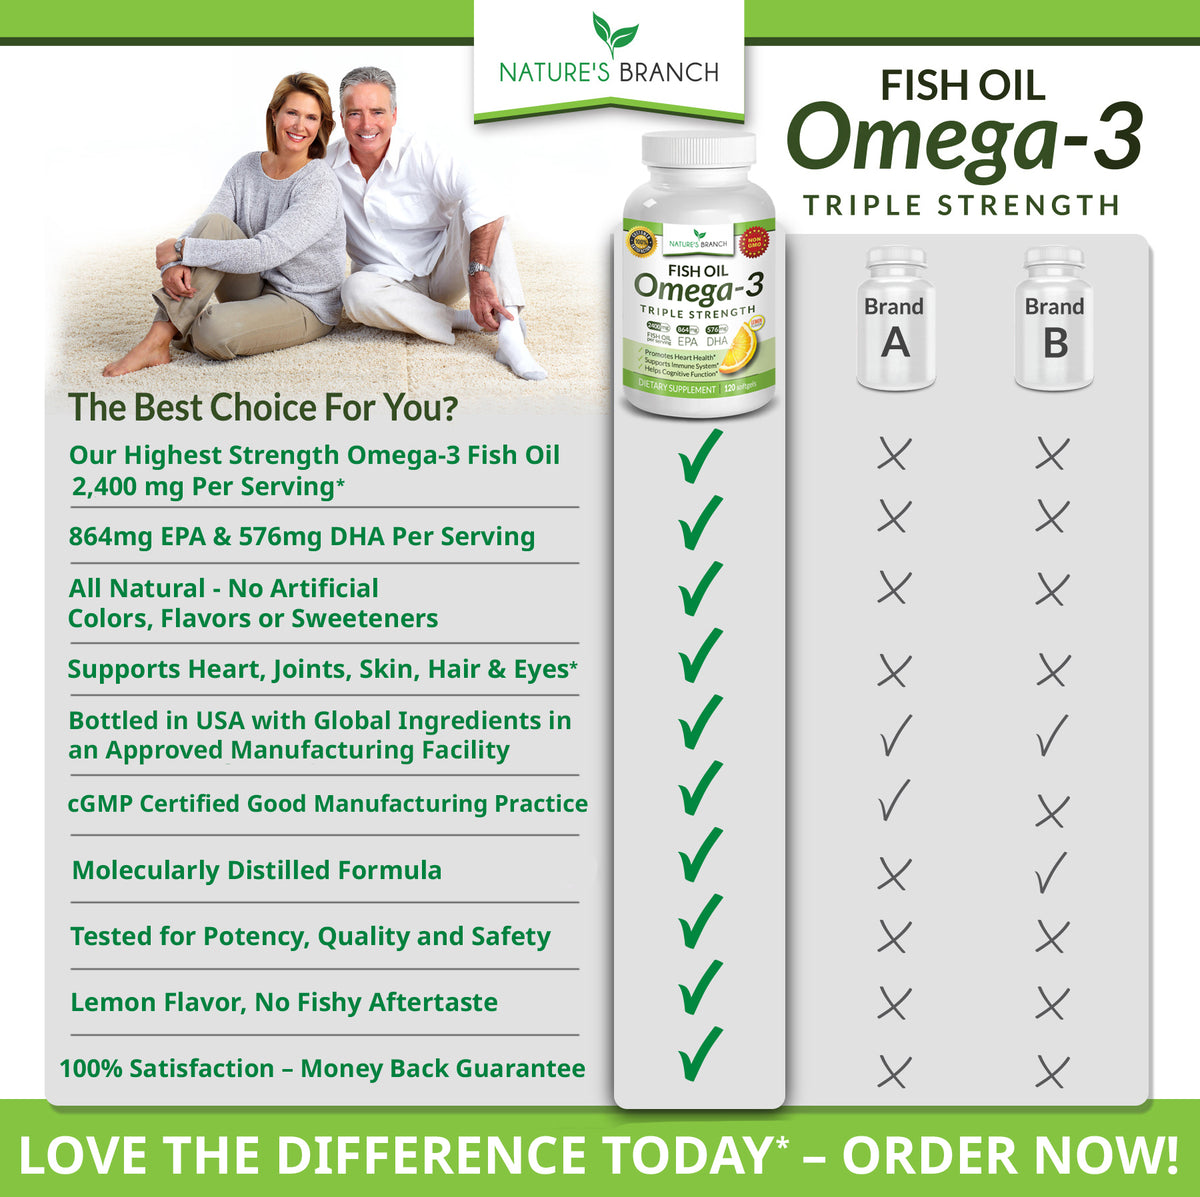 Triple Strength Omega-3 Fish Oil (120 Softgels)